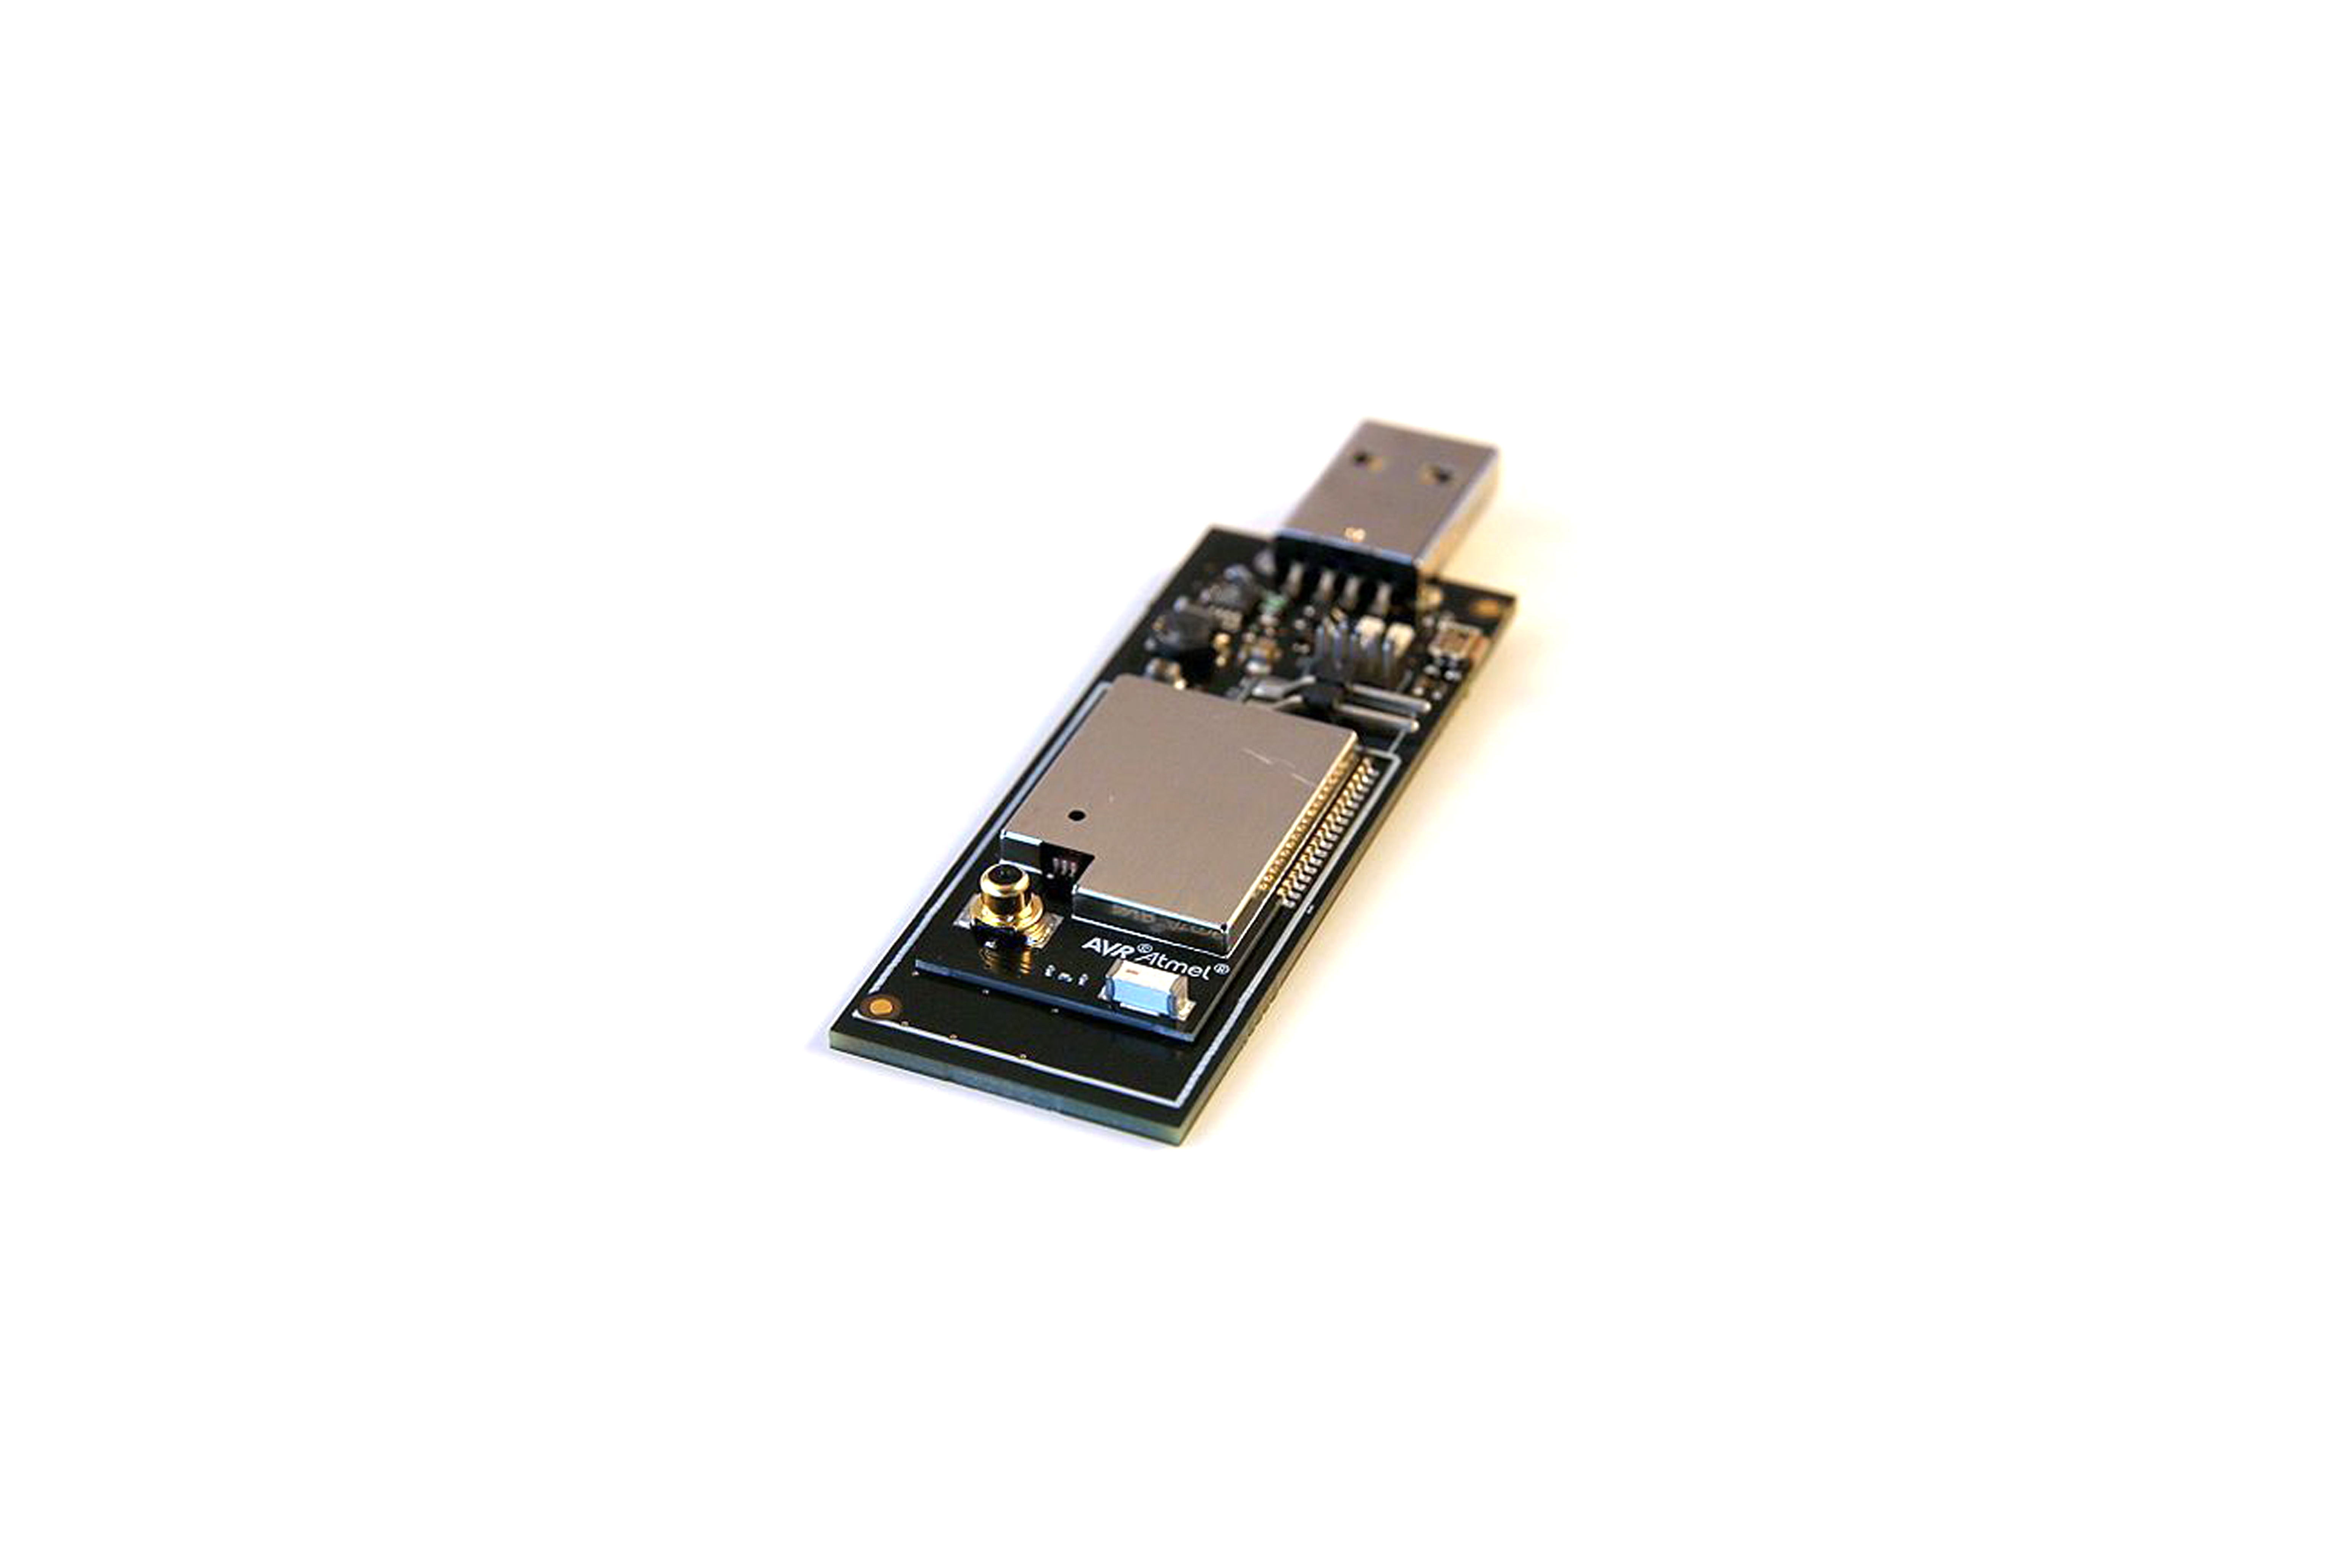 USB Stick For Sub Ghz Zigbit